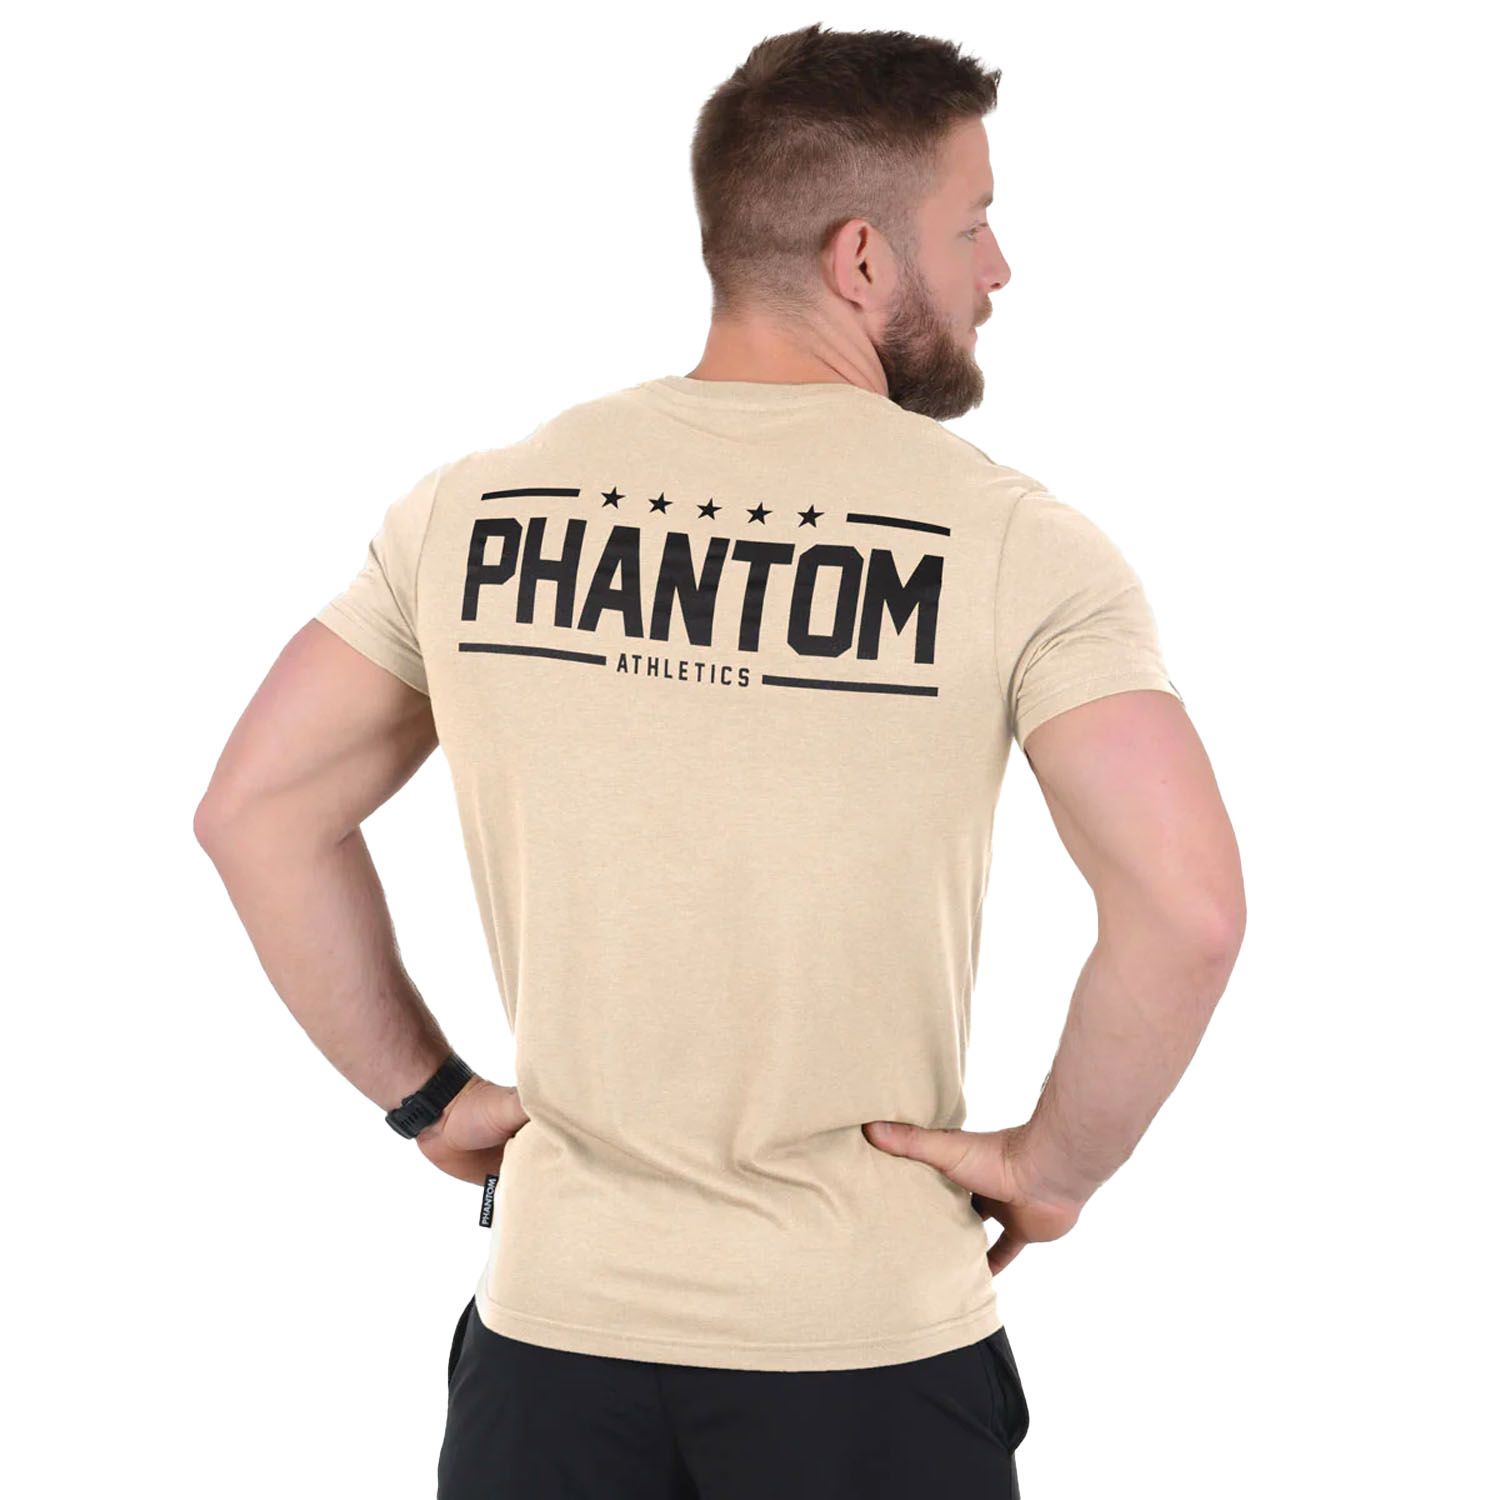 Phantom Athletics T-Shirt, Born In The Cage, sand